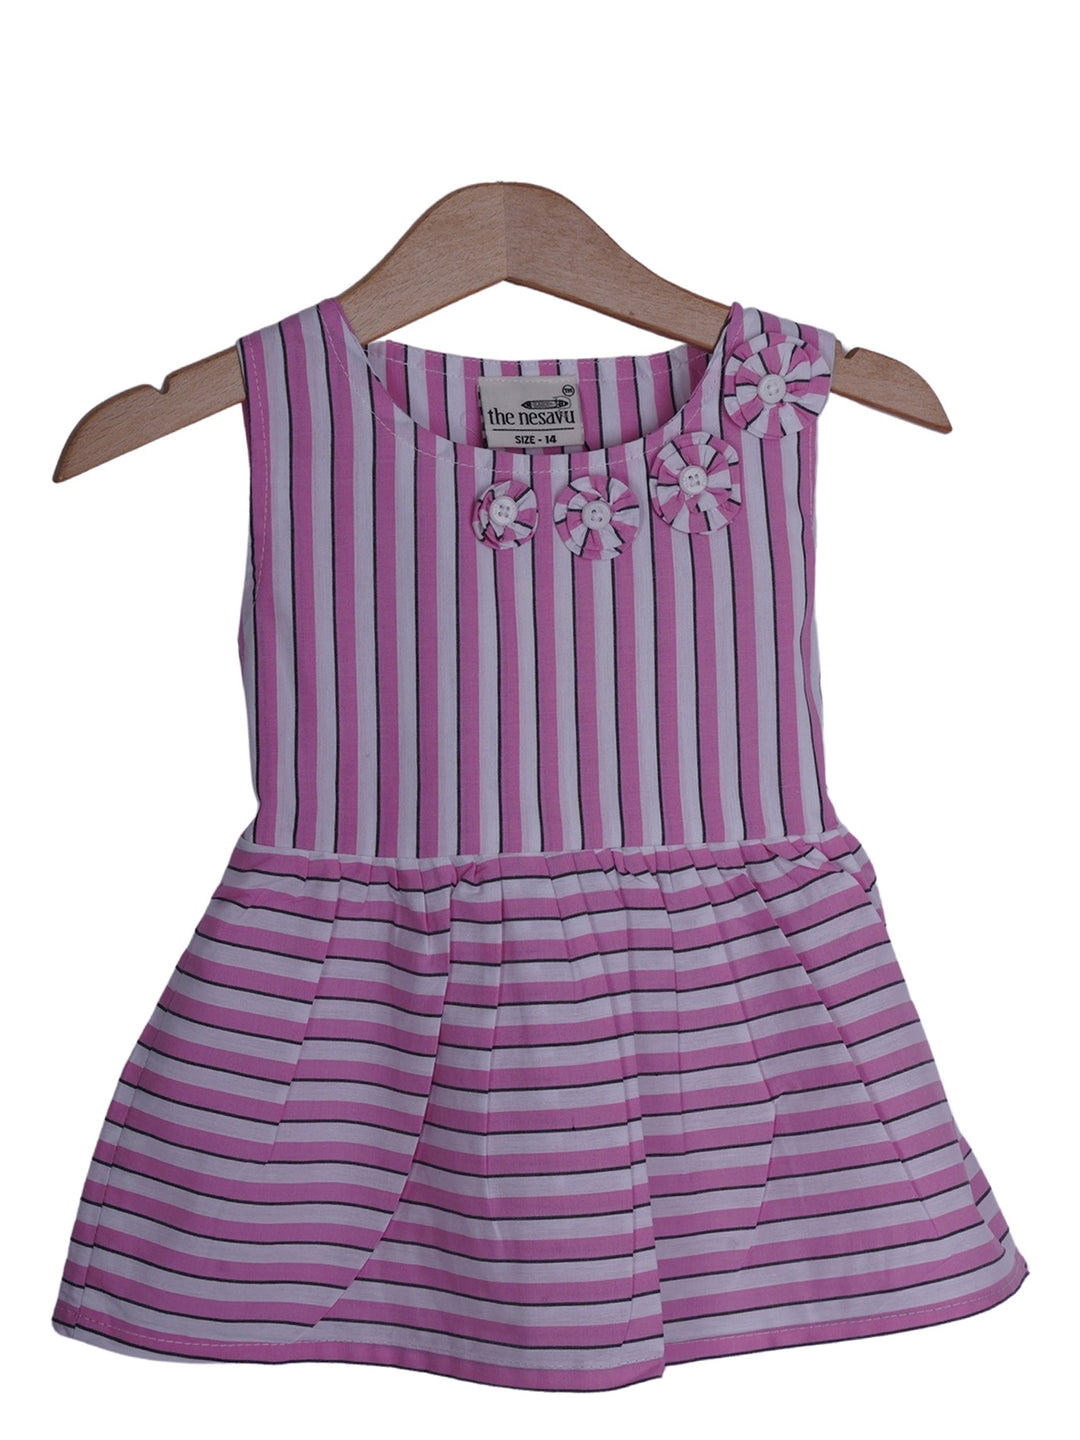 The Nesavu Baby Frock / Jhabla Pink Striped Cotton Wear For Little Girls psr silks Nesavu 14 (6M-12M) / red BFJ262